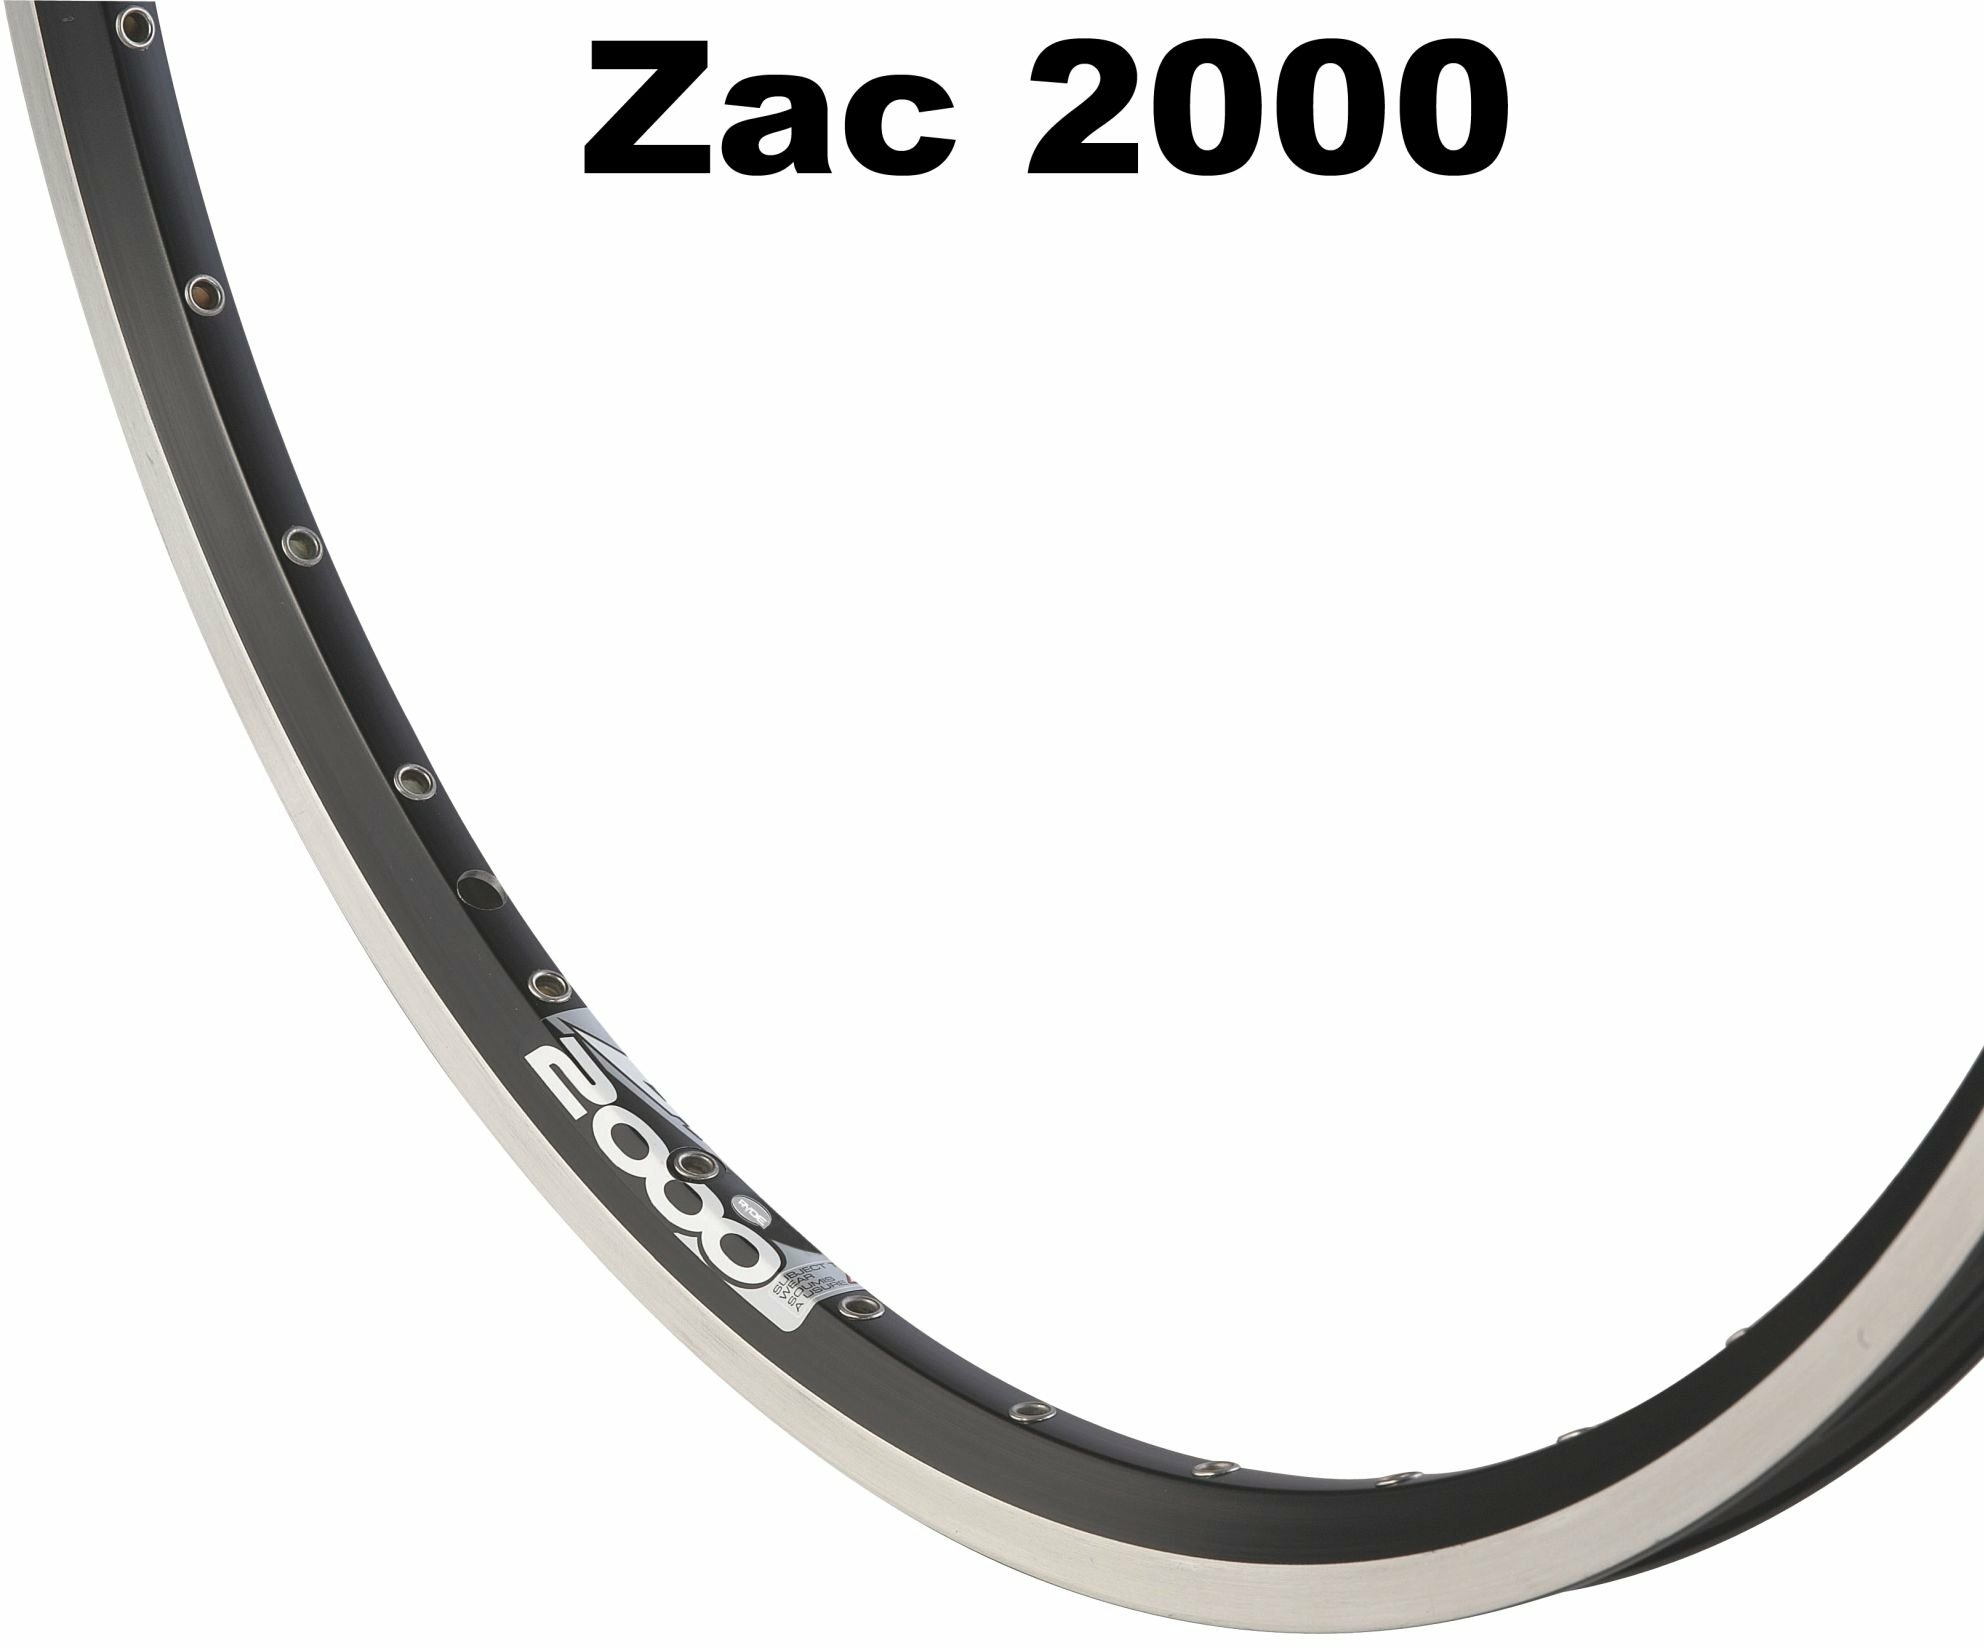 RYDE Hinterrad ZAC 2000 (TY5007), 26 Zoll